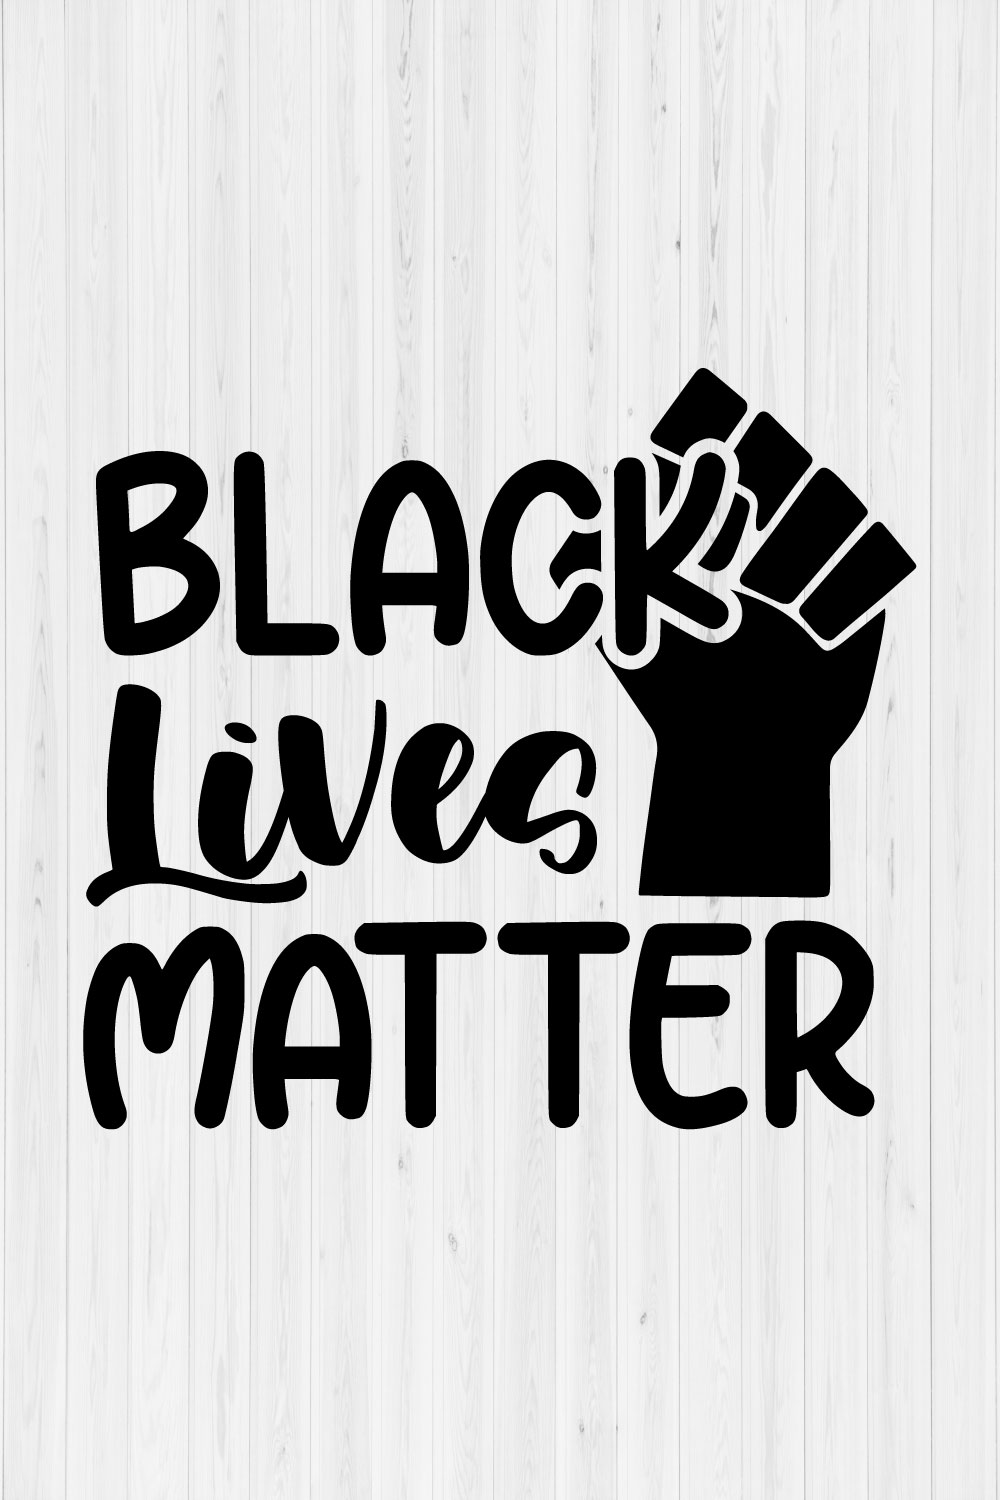 Black Lives Matter pinterest preview image.